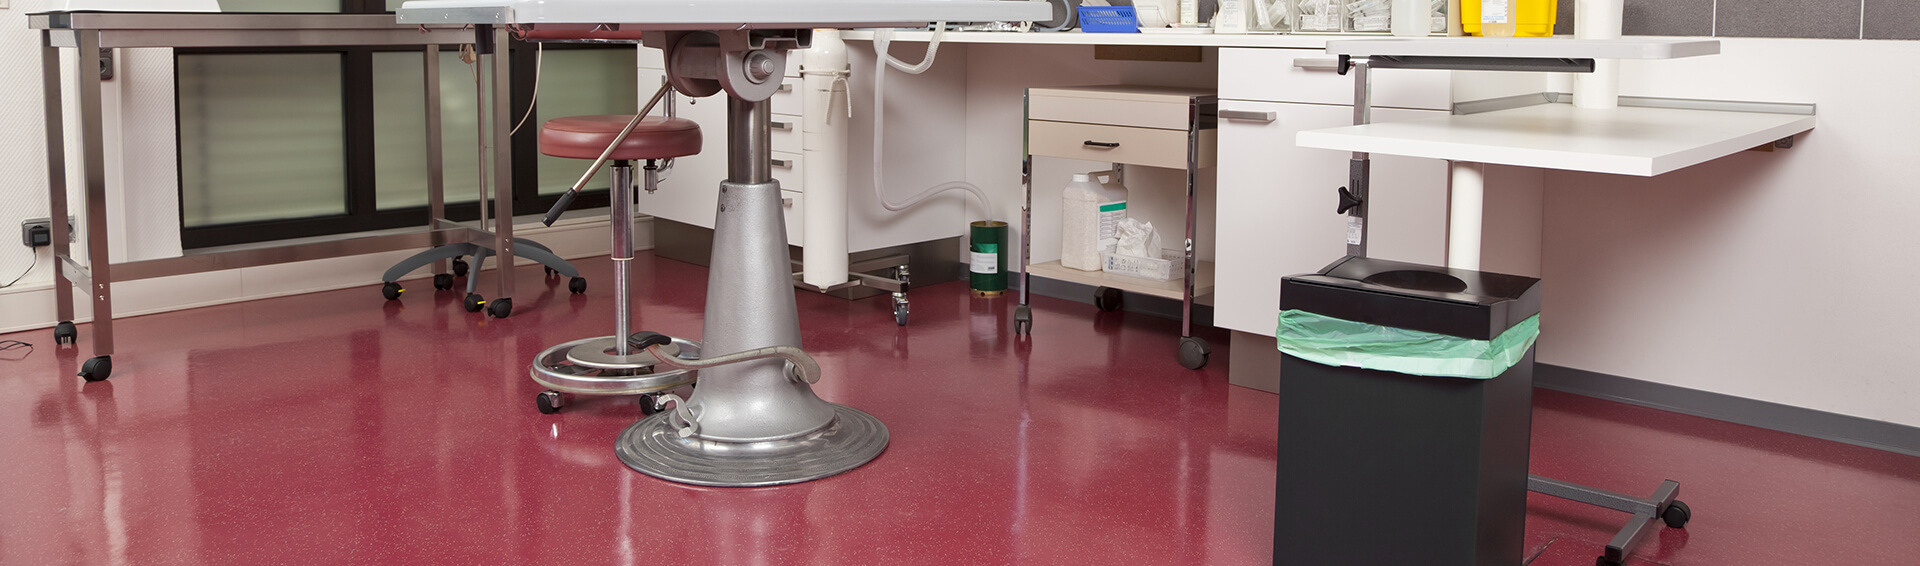 veterinarian operating room floors